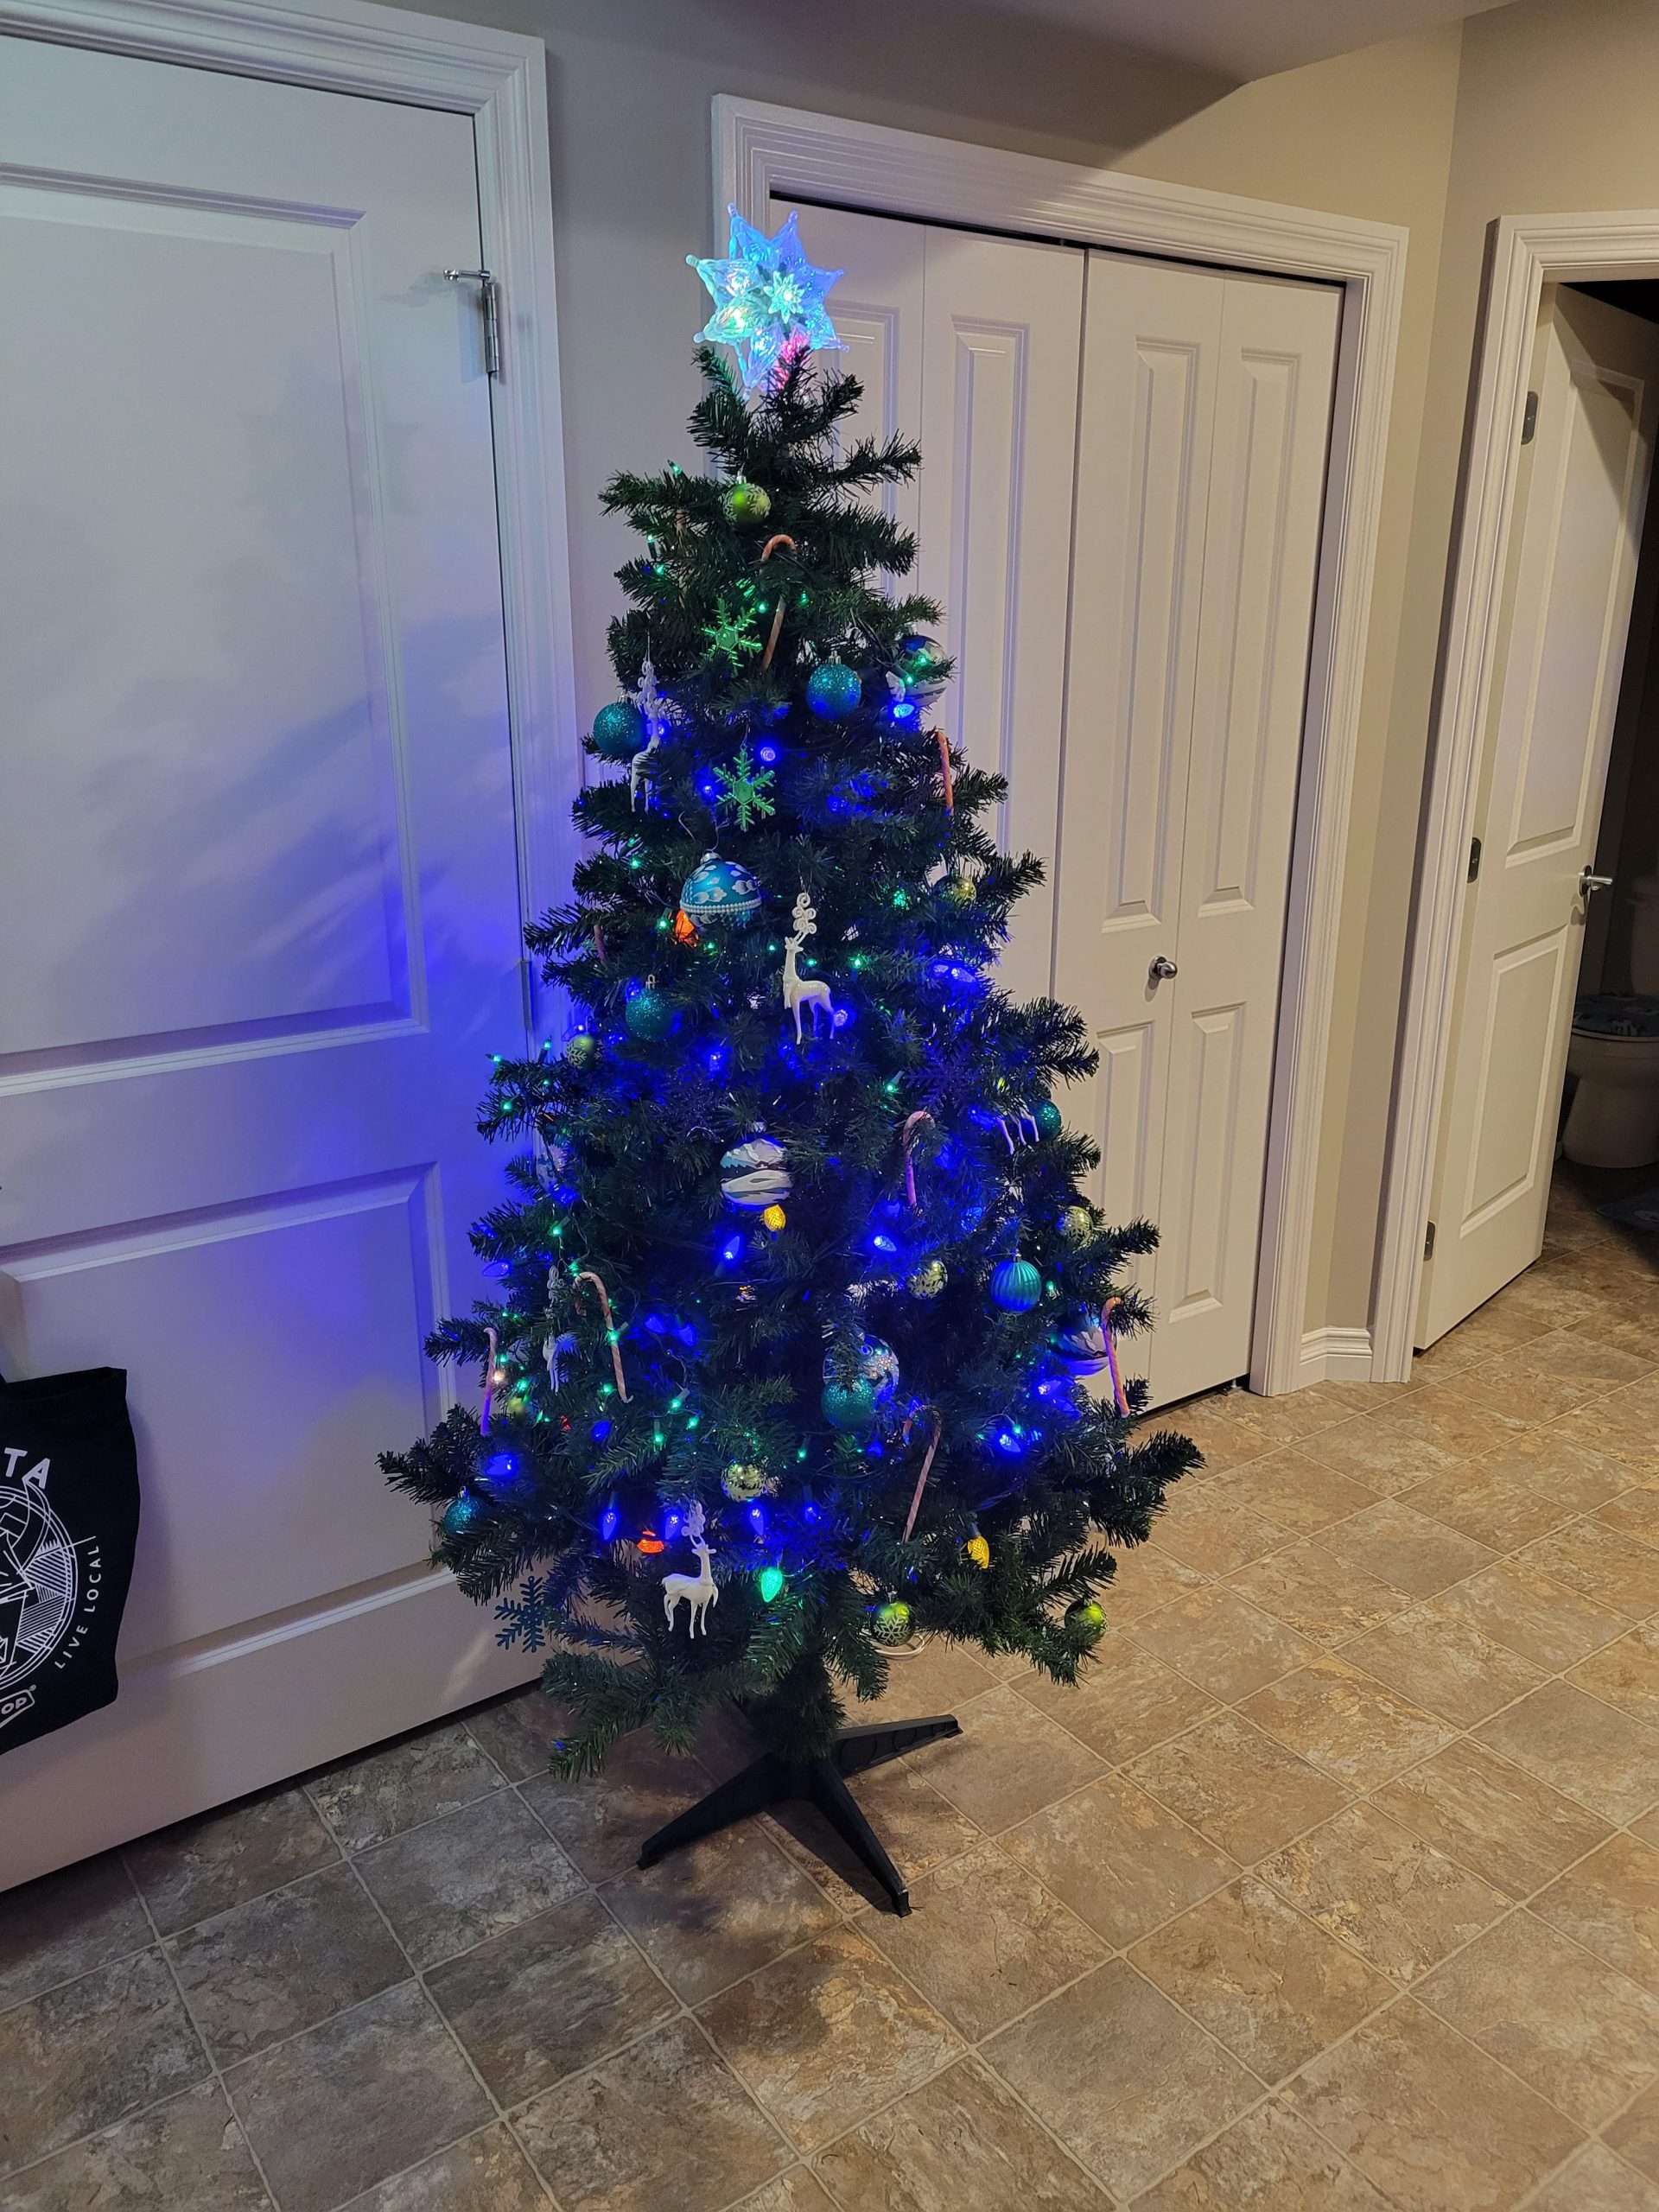 My first Christmas tree.